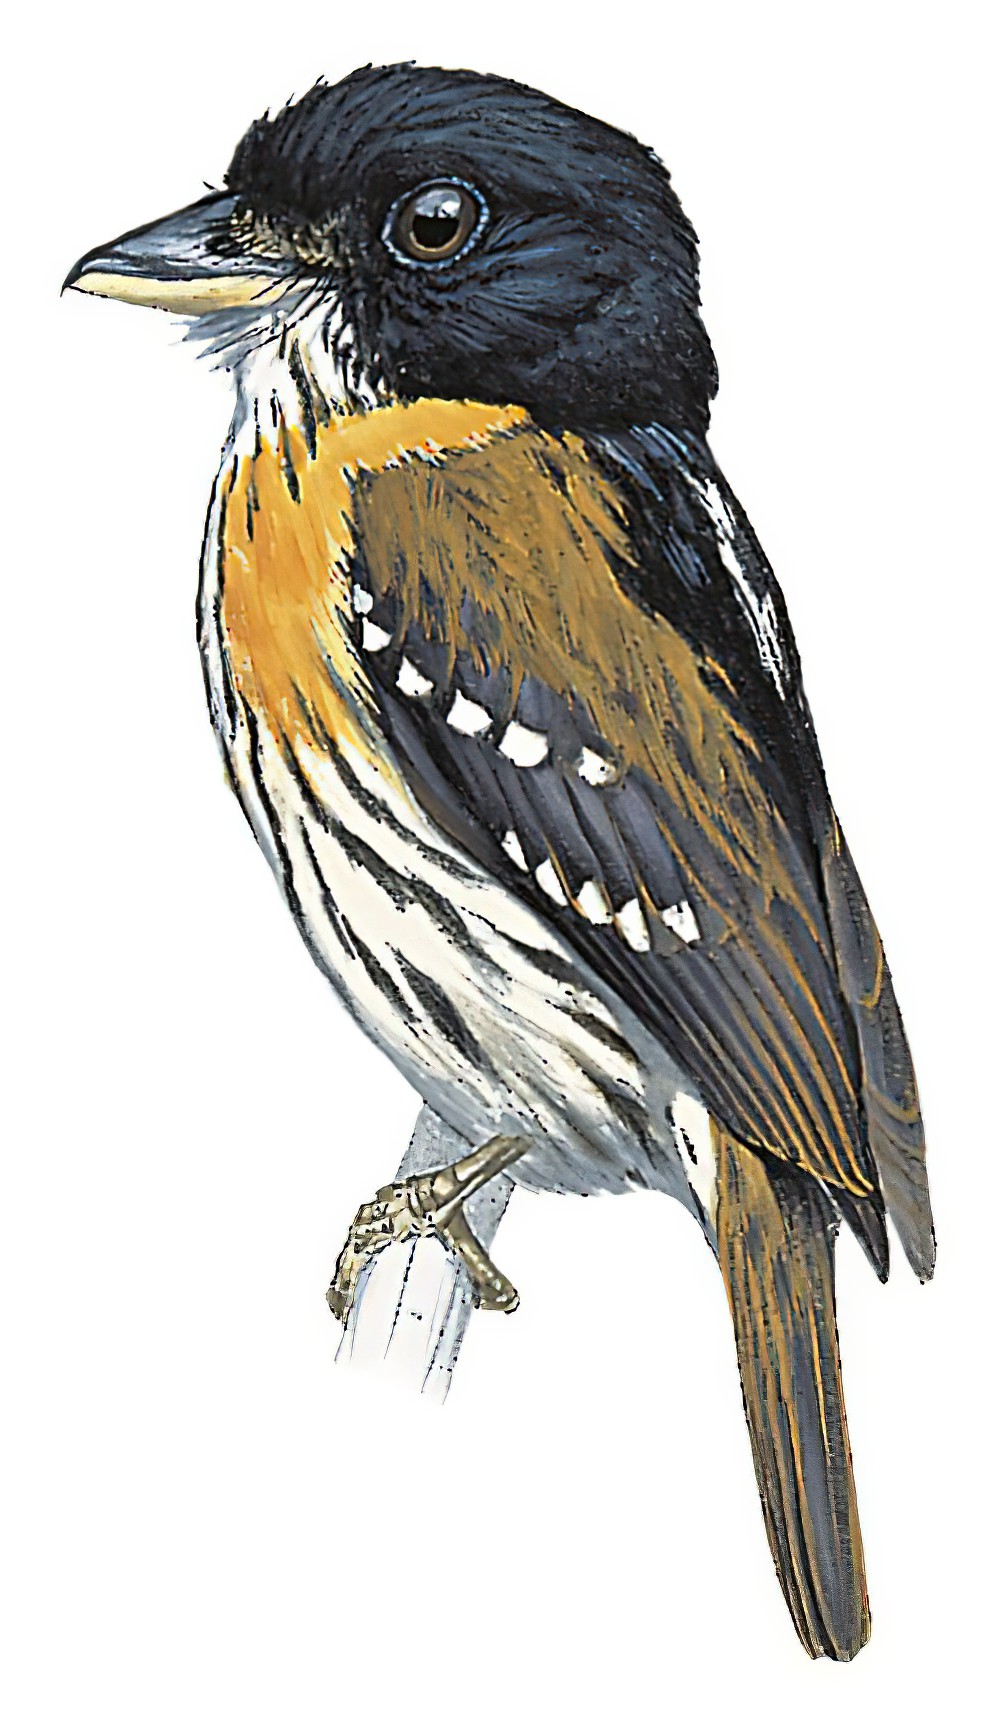 Rufous-sided Broadbill / Smithornis rufolateralis